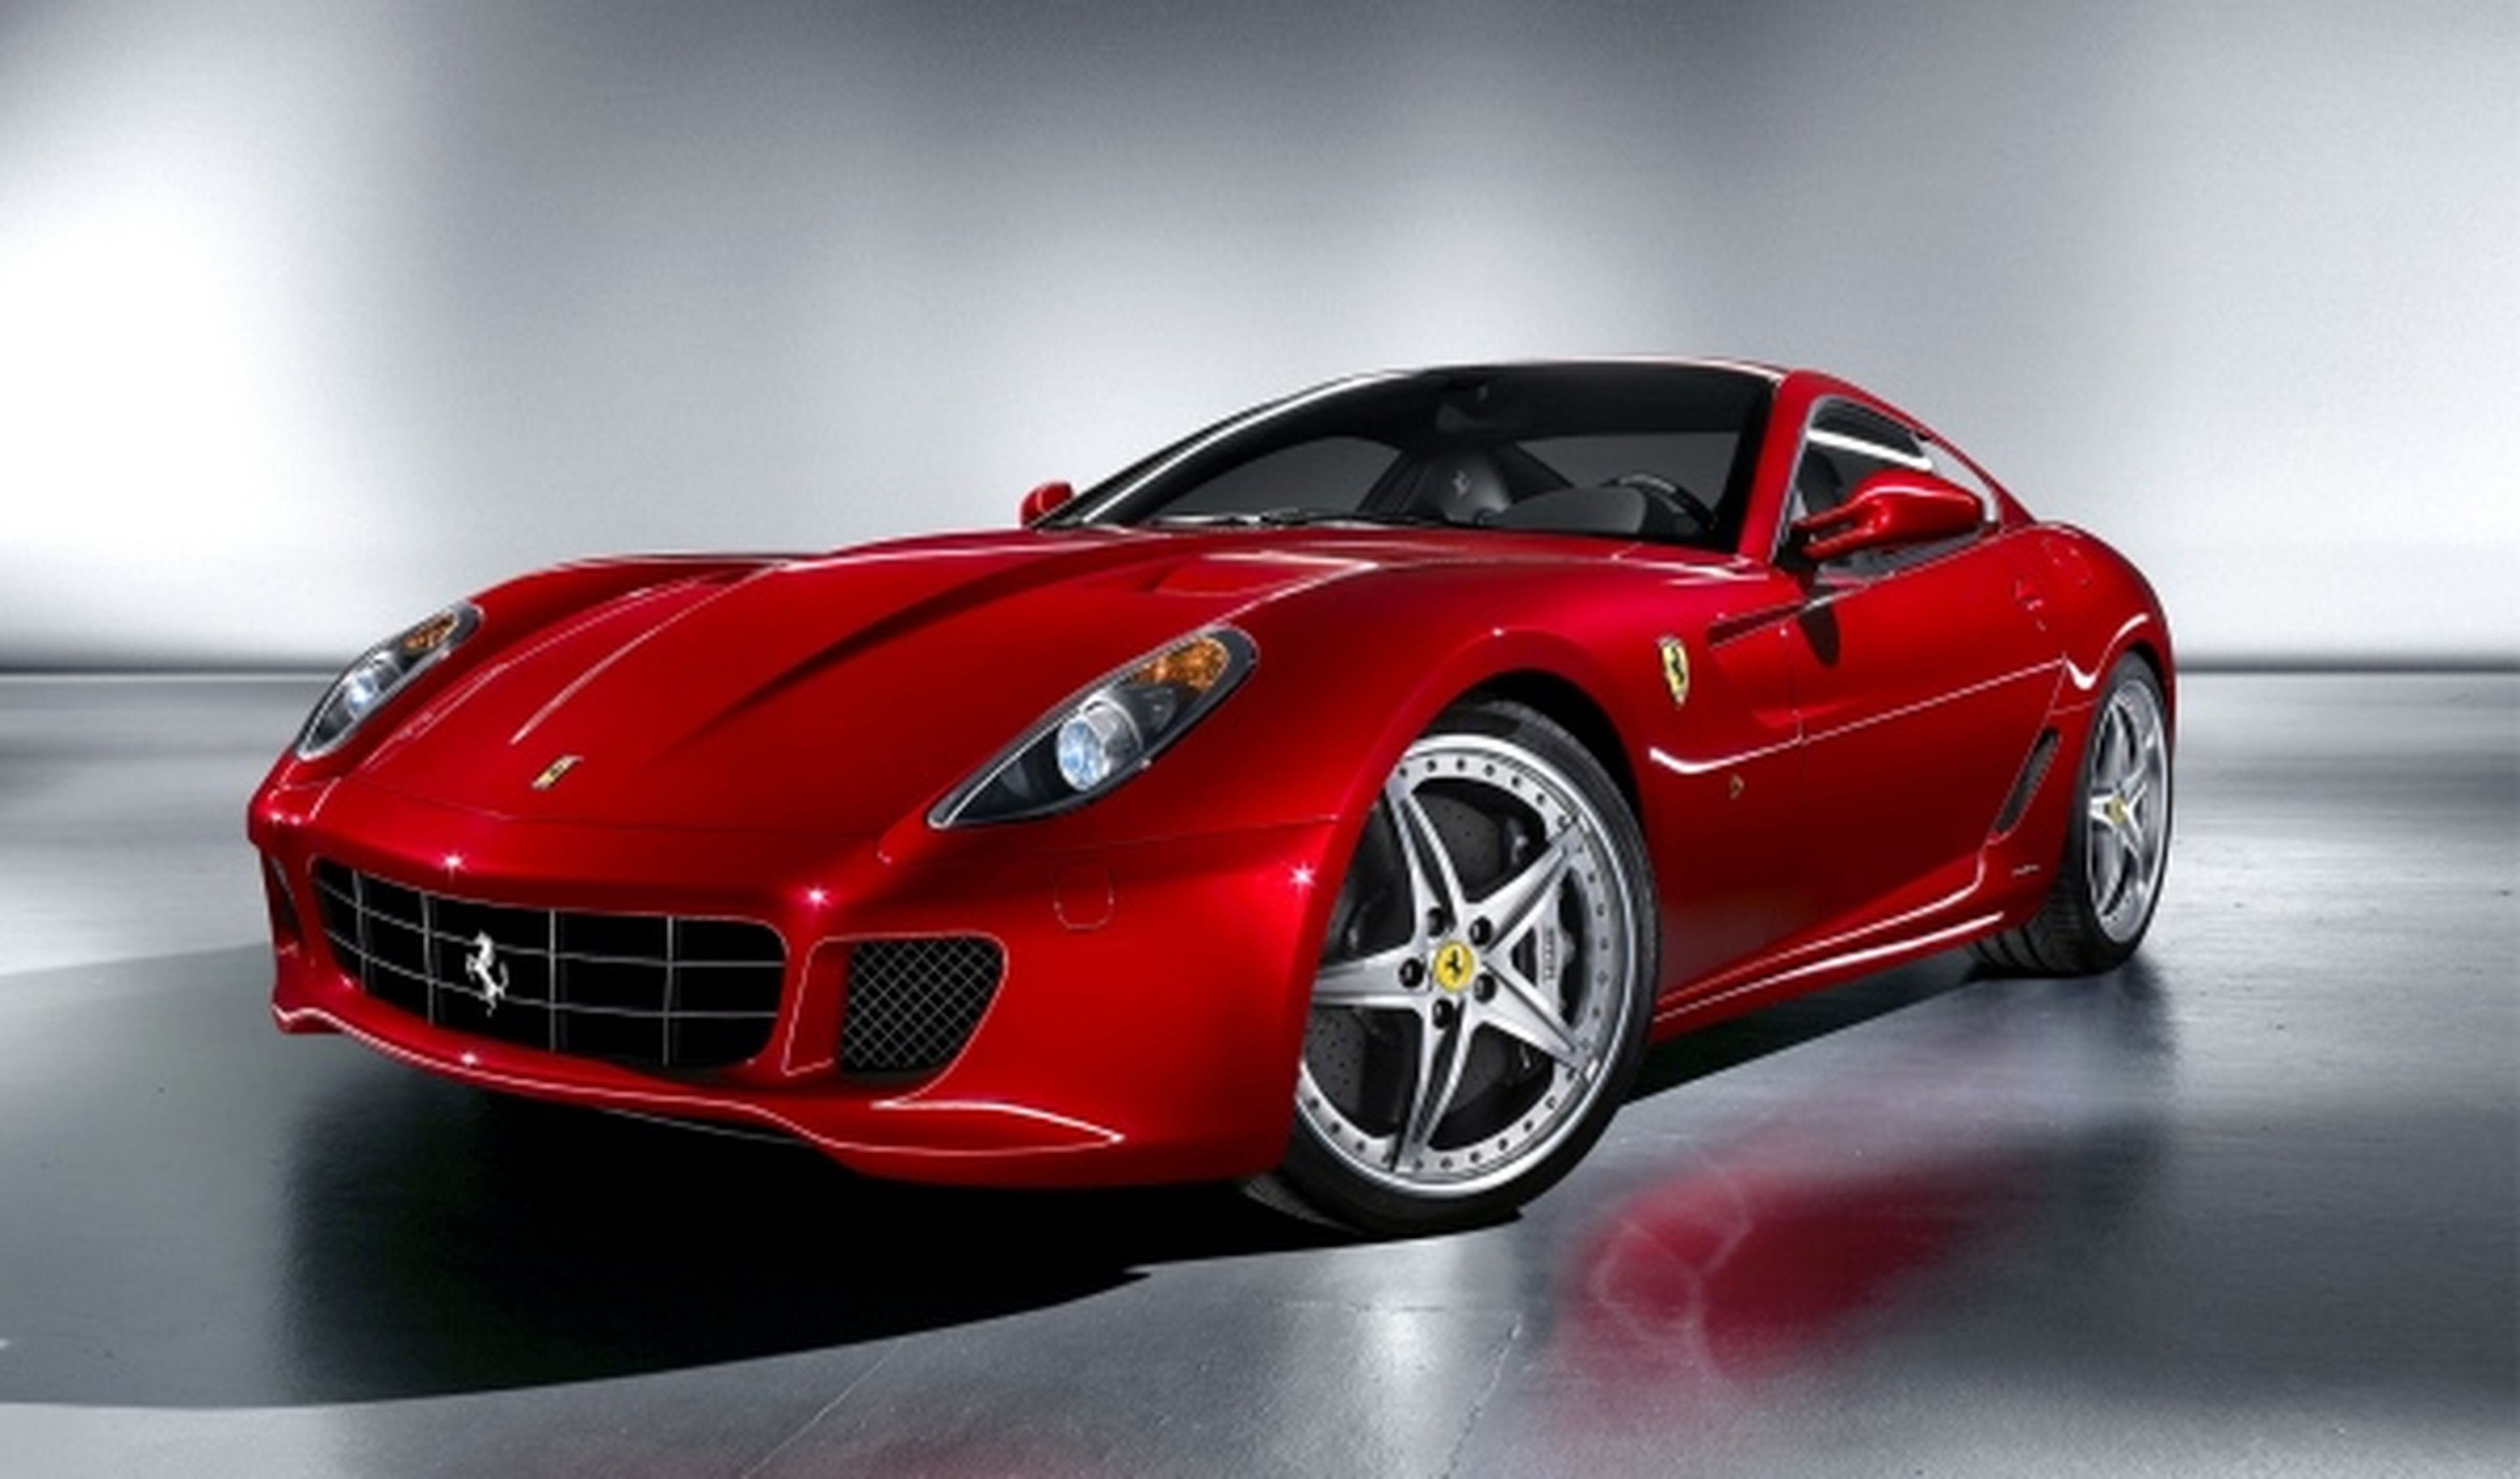 Nuevo modelo V12 de Ferrari para el Salón de Ginebra 2012